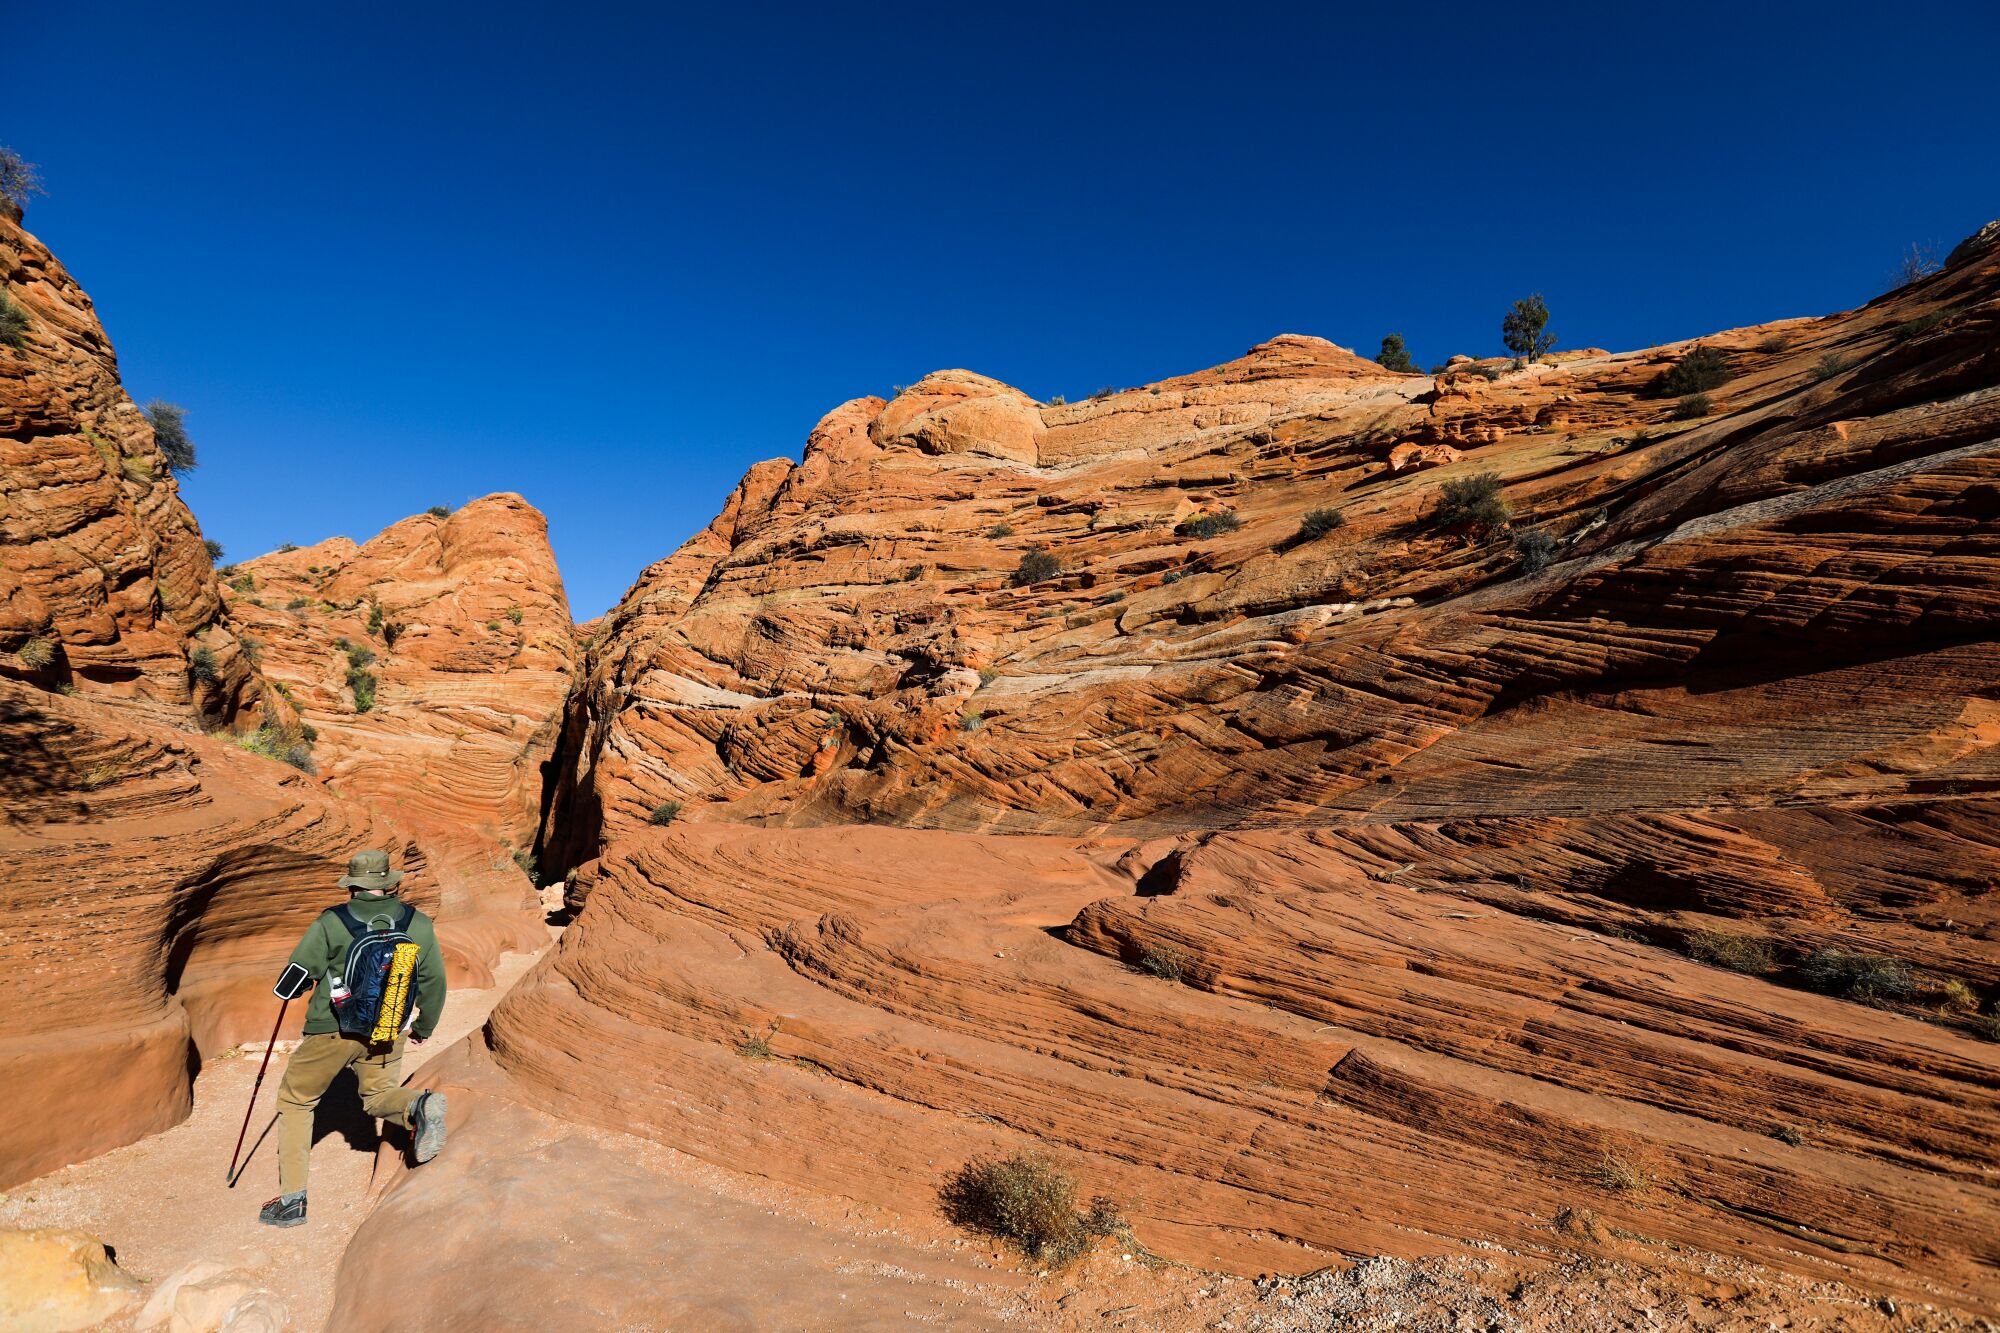 A man hikes through desert rocks